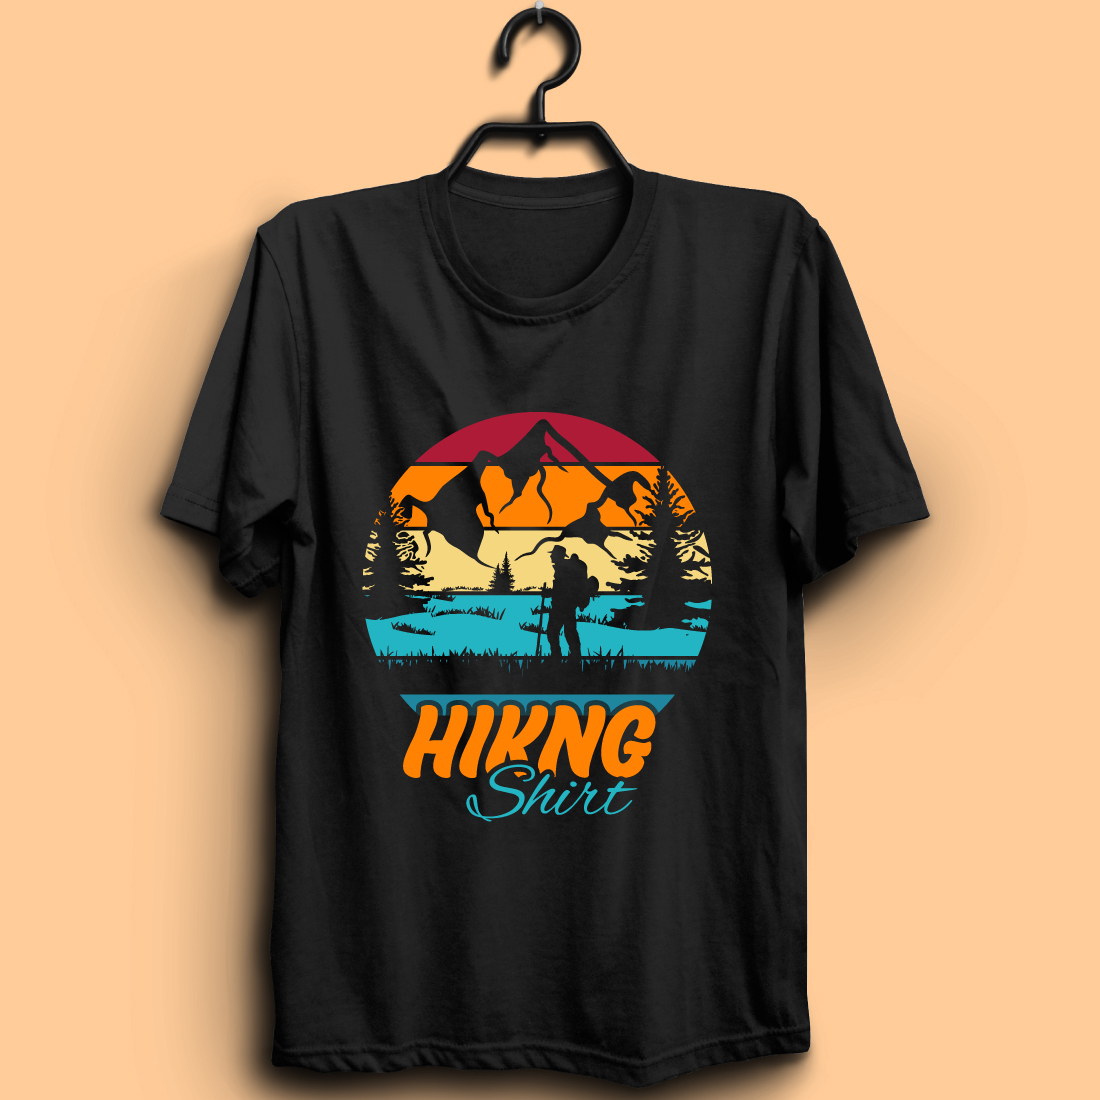 hiking t shirt design05 348